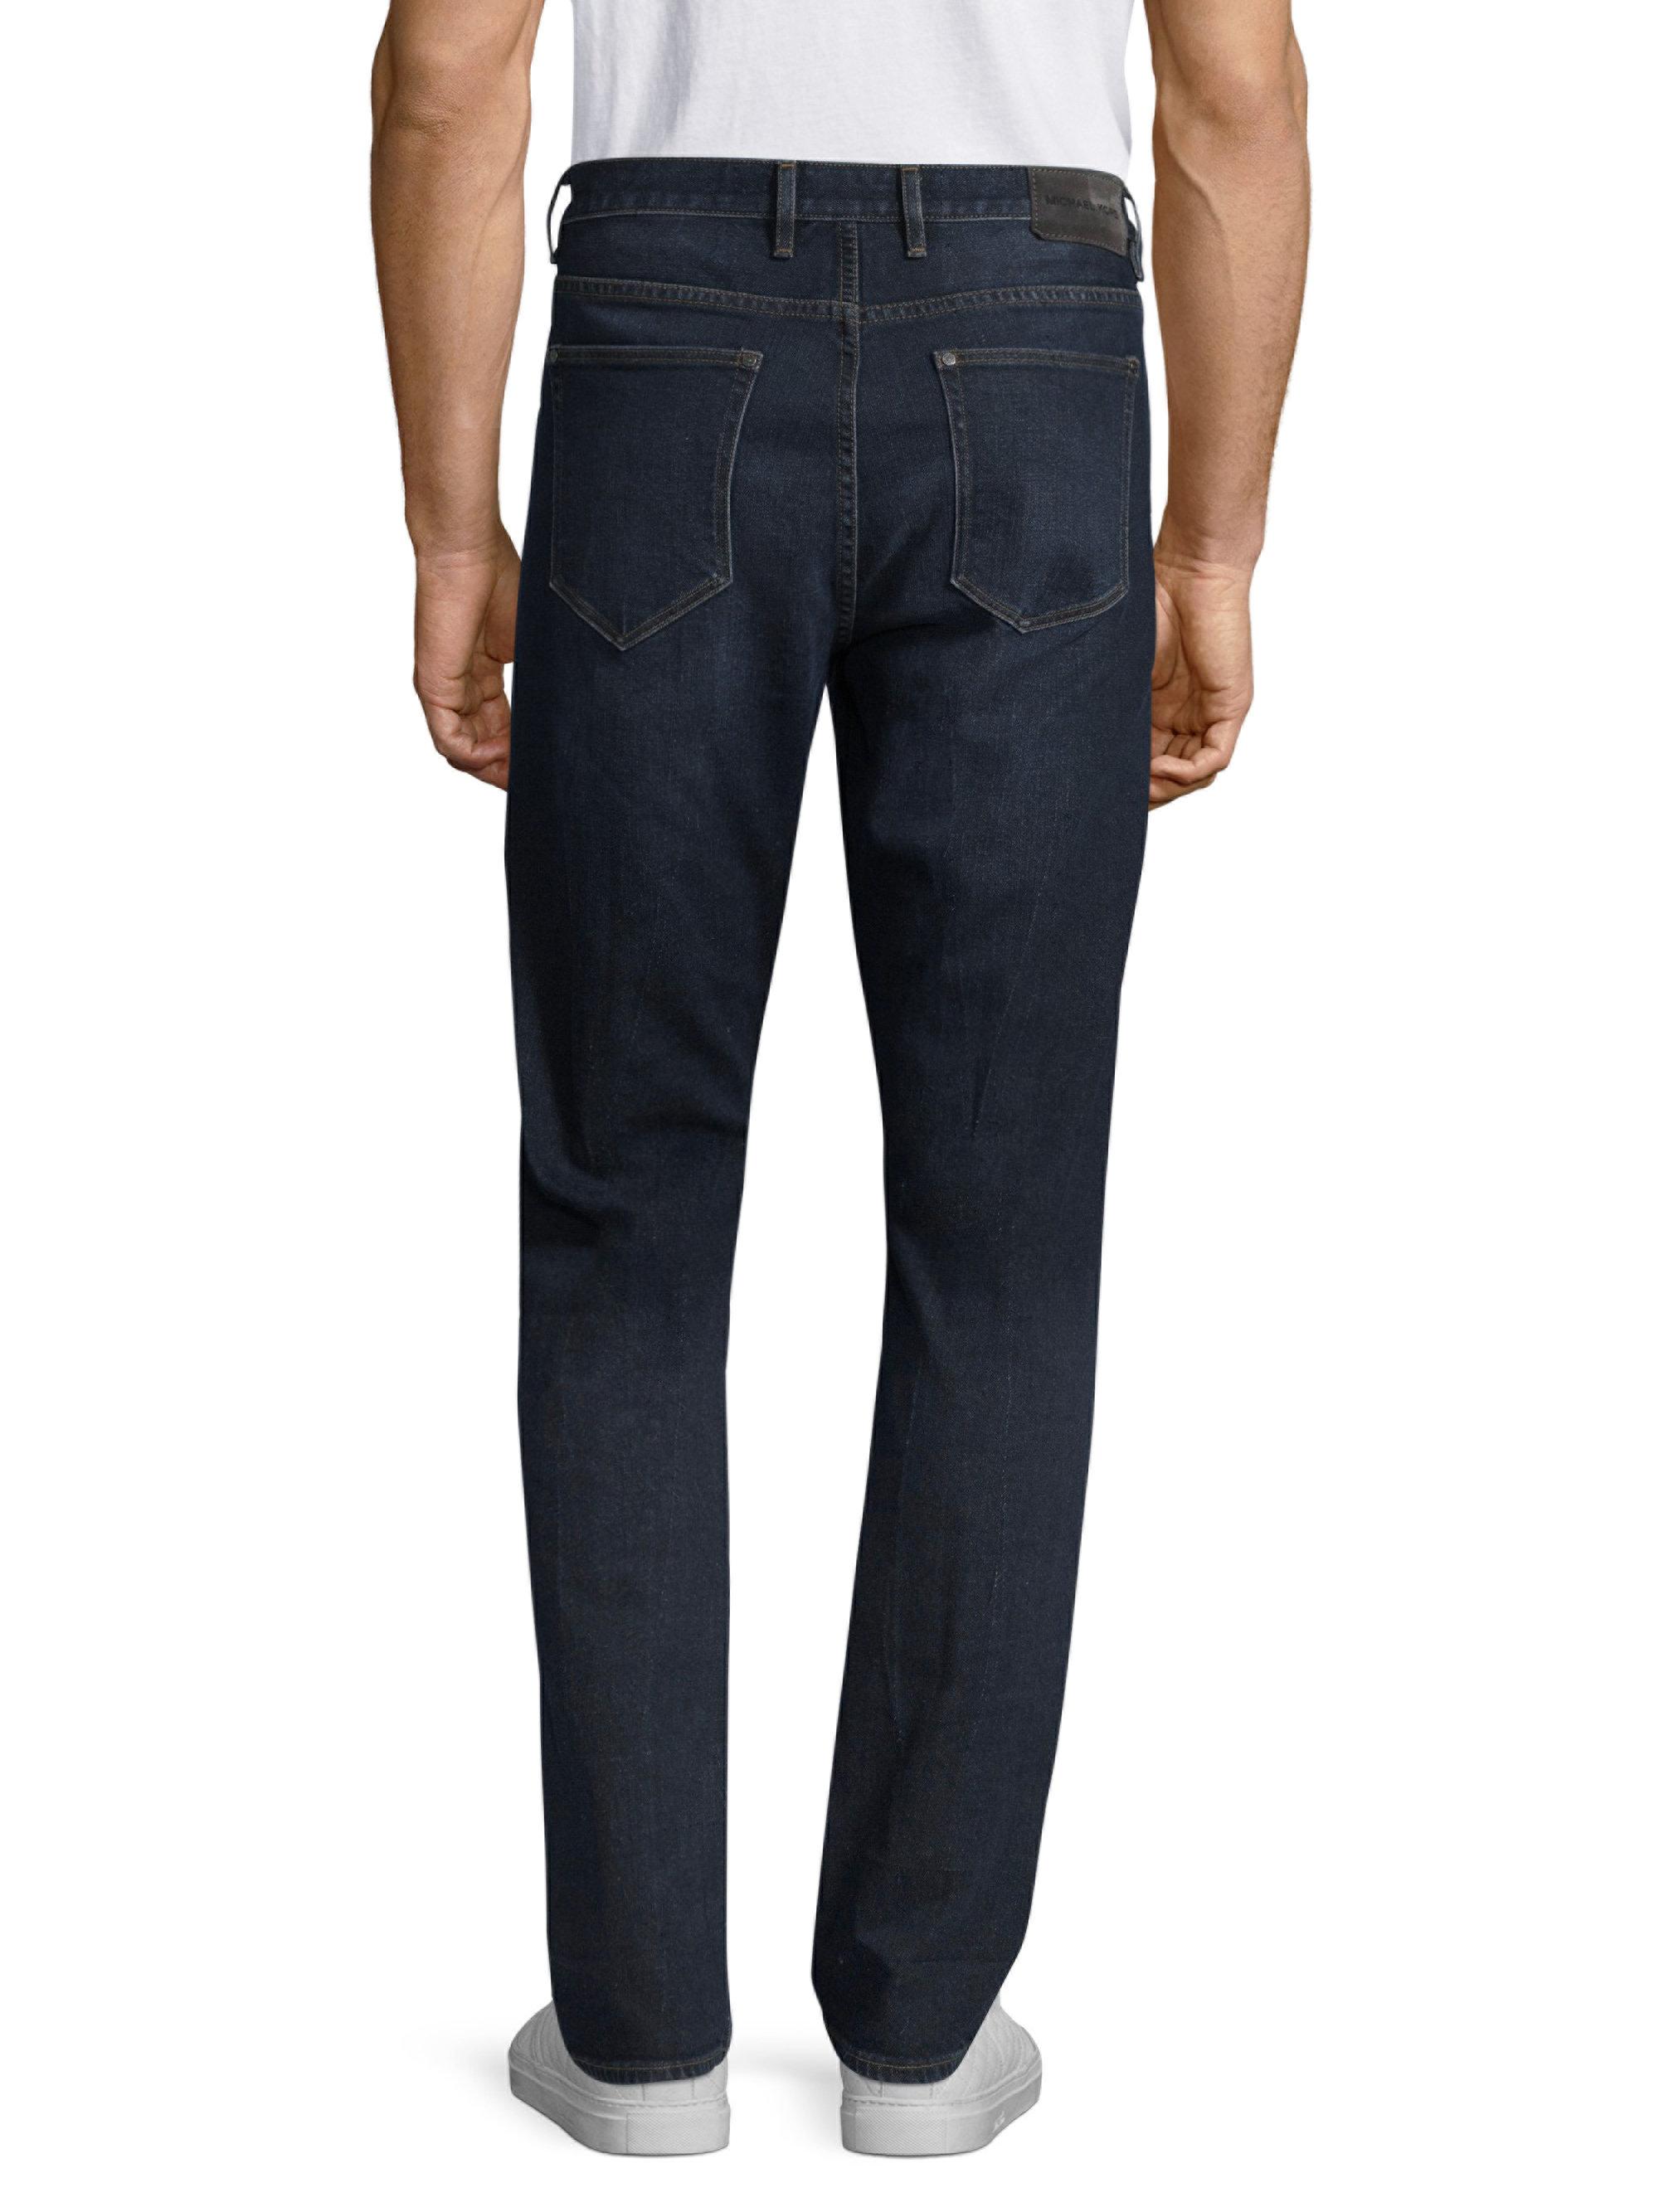 Lyst - Michael Kors Parker Devon Slim-fit Jeans in Blue for Men